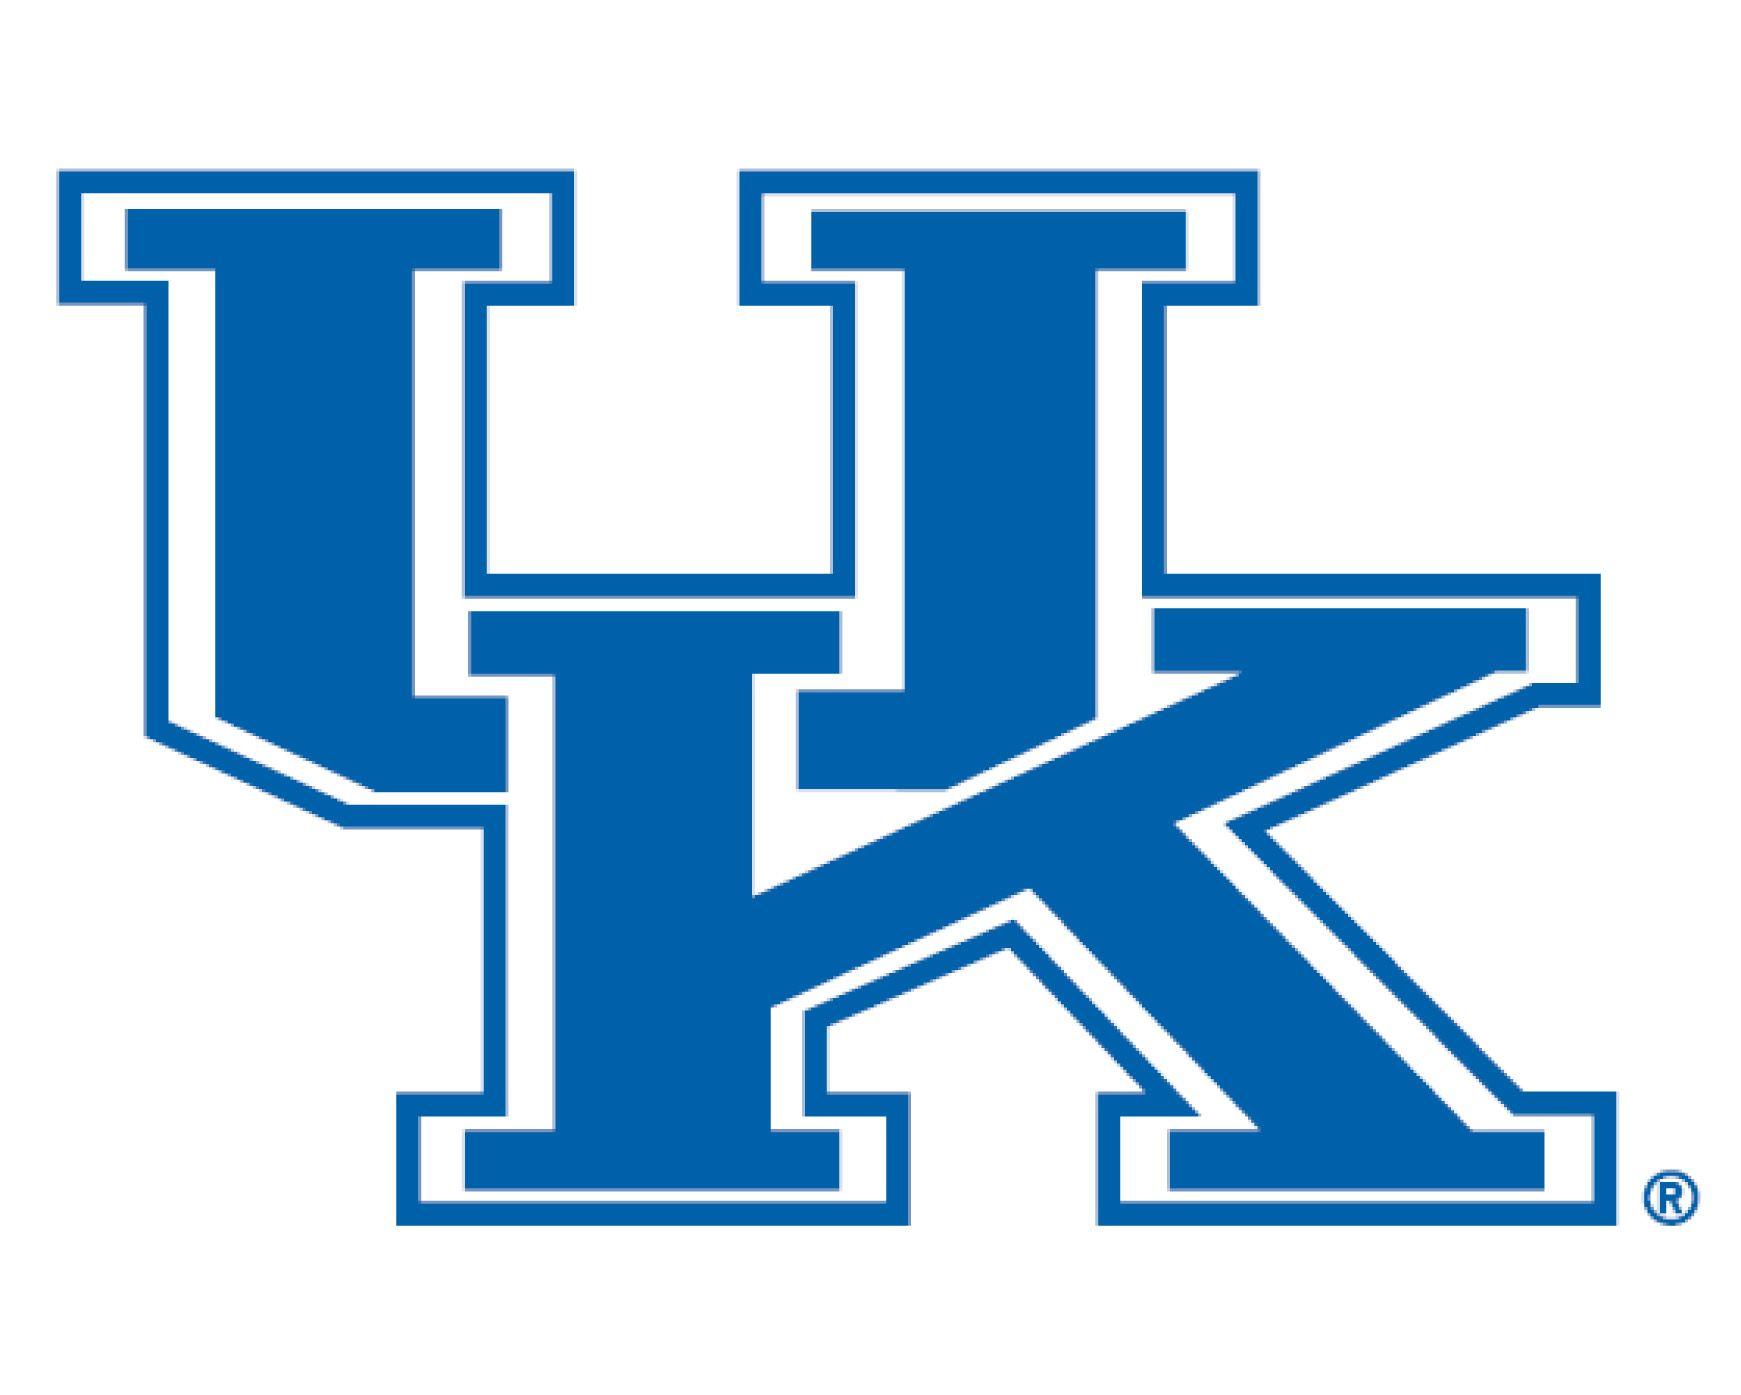 U of K Logo - Tennis On Campus - University of Kentucky Club Tennis Team